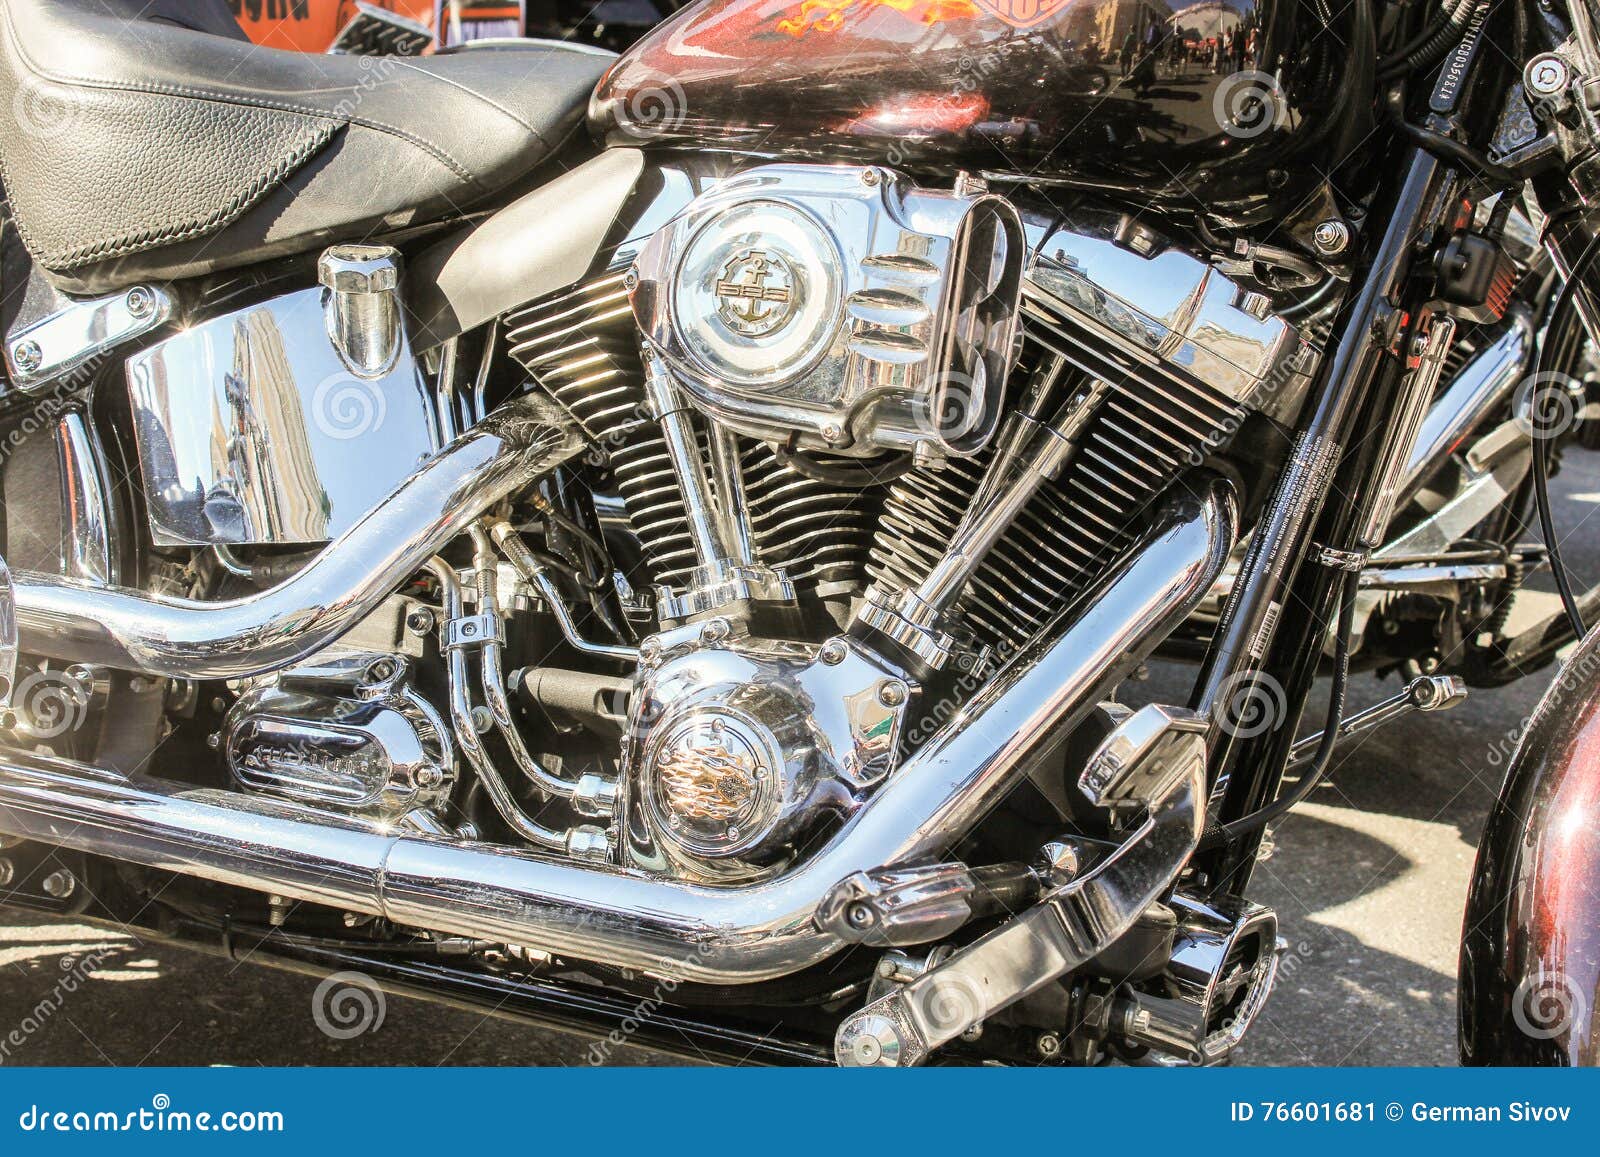 Shiny motorcycle engine. editorial photo. Image of street - 76601681